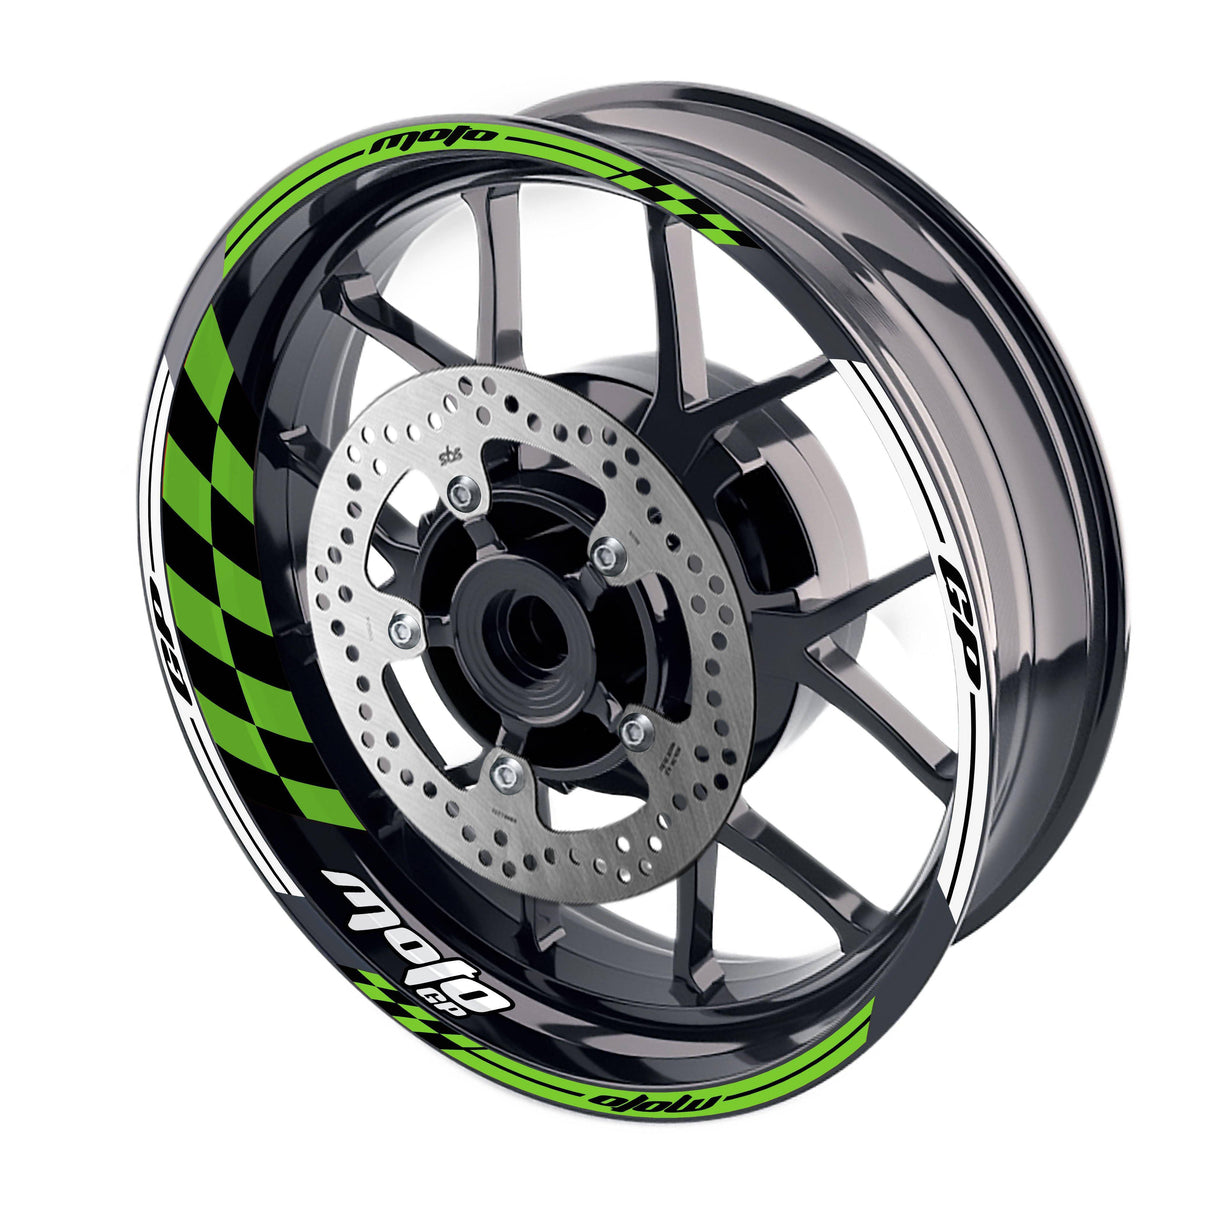 For Yamaha YZF R1 98-18 Logo MOTO 17 inch Rim Wheel Stickers GP01 Racing Check.